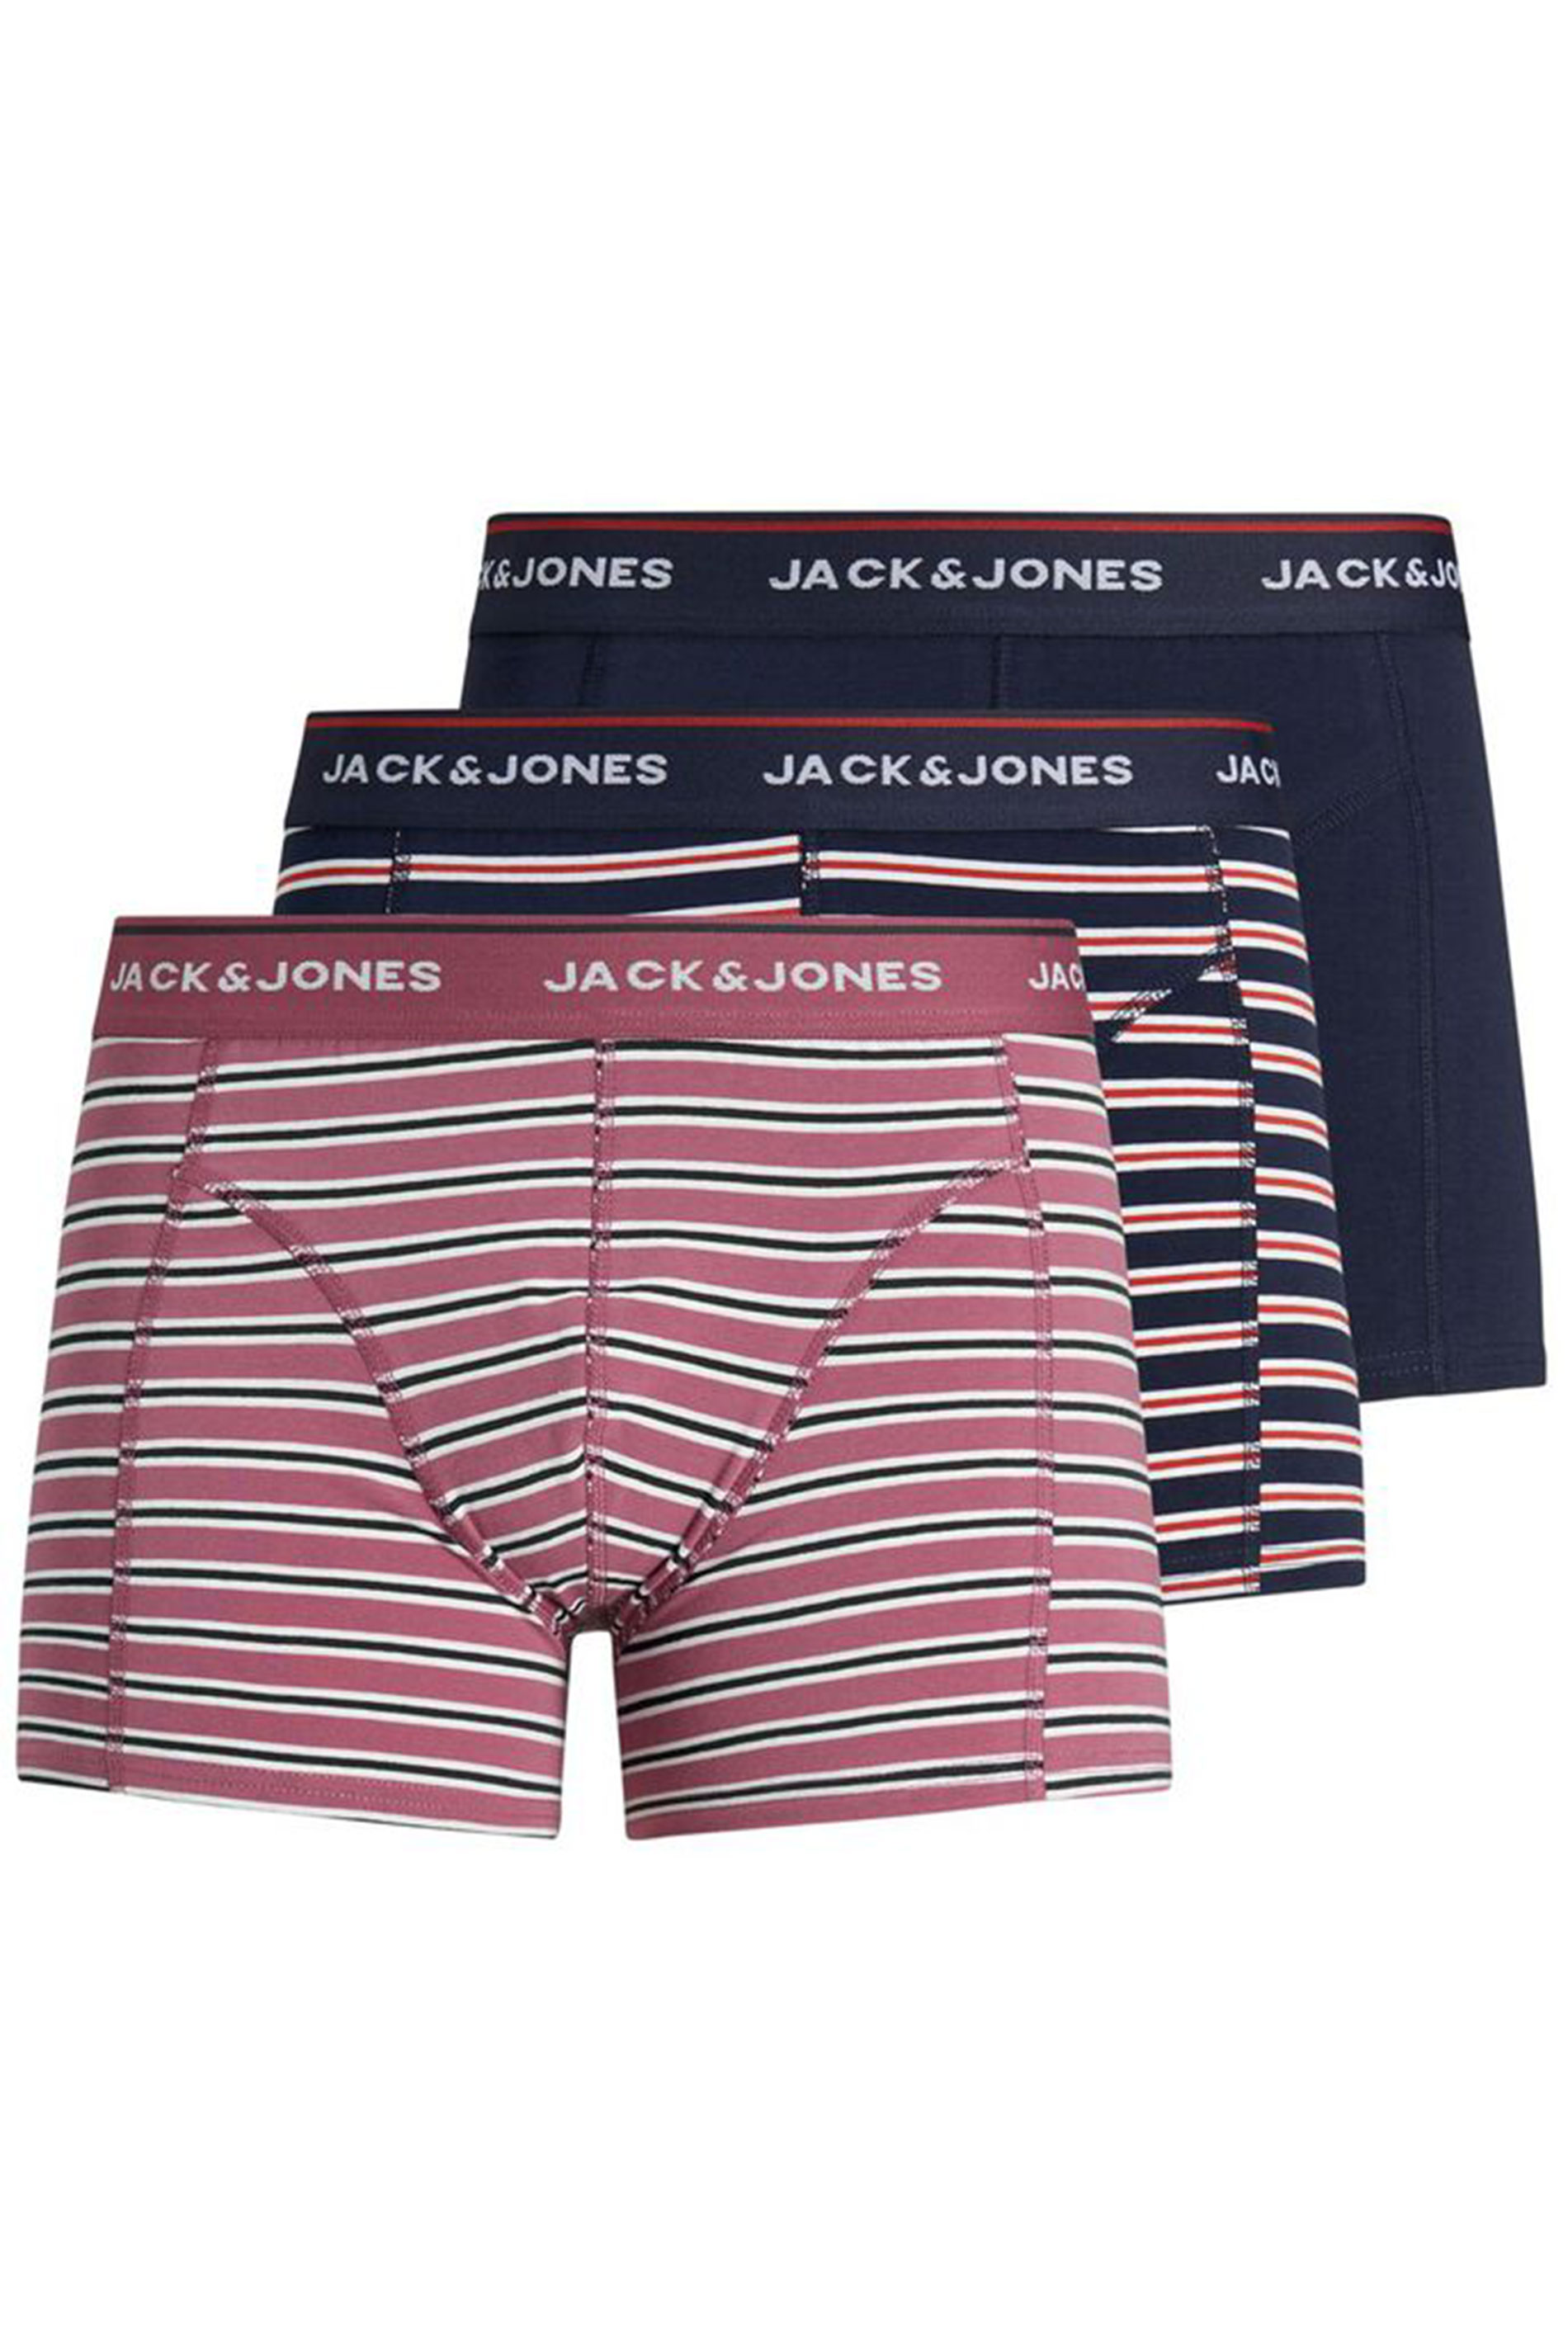 JACK & JONES 3 PACK Multi Stripe Boxers_F.jpg